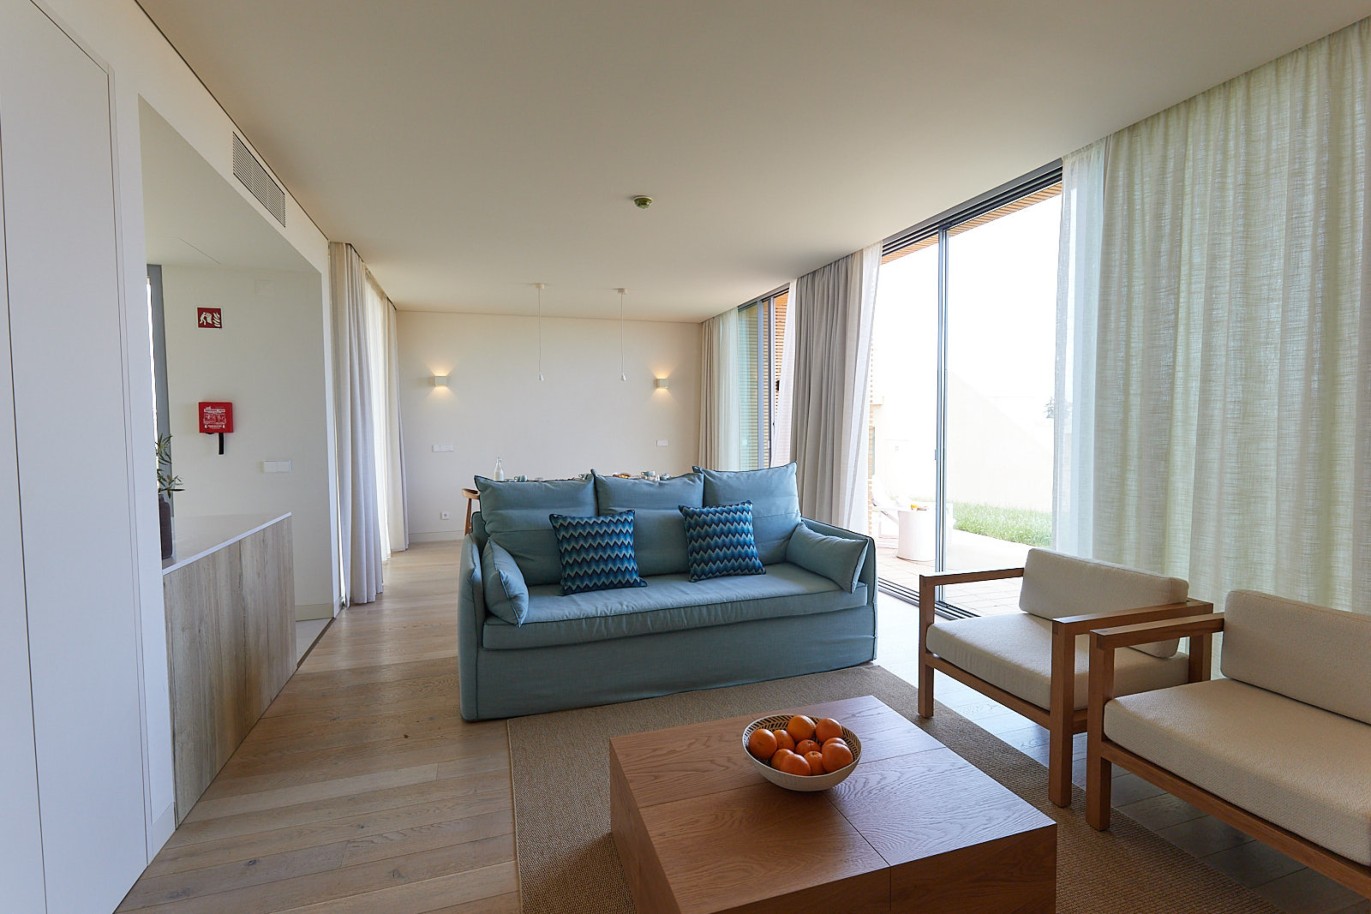 2 bedroom apartment in resort, for sale in Porches, Algarve_228785